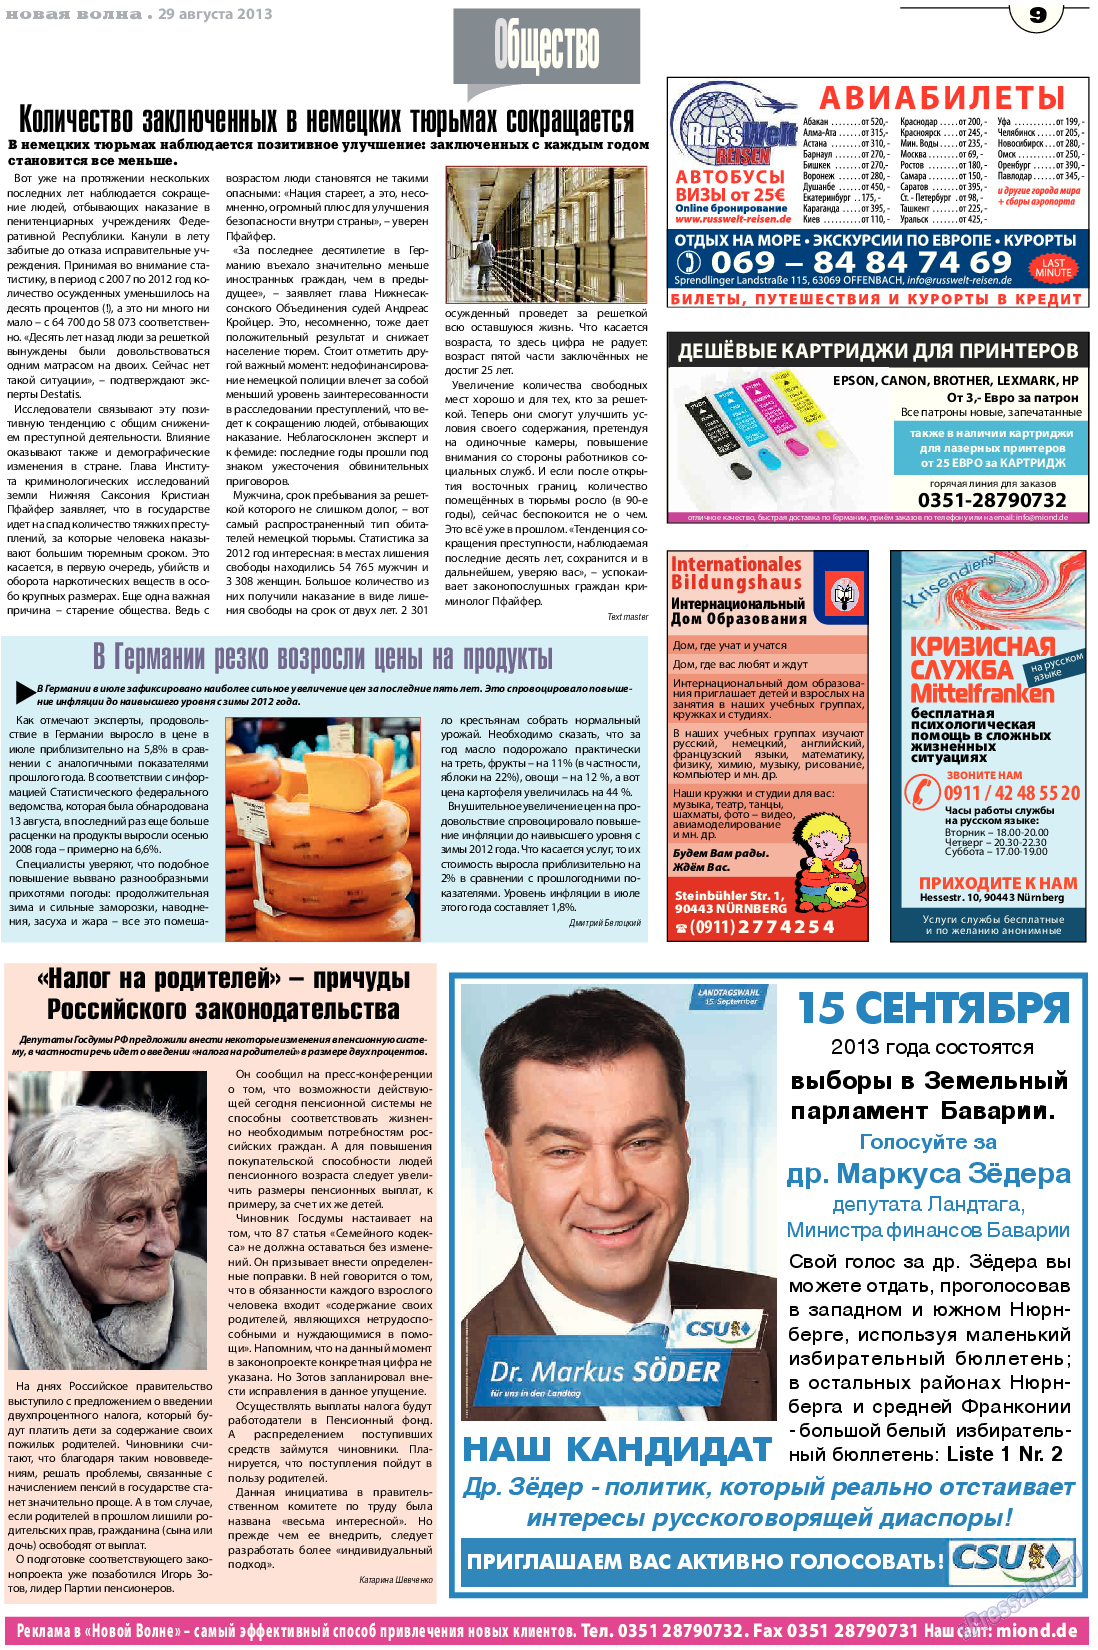 Новая Wолна, газета. 2013 №35 стр.9